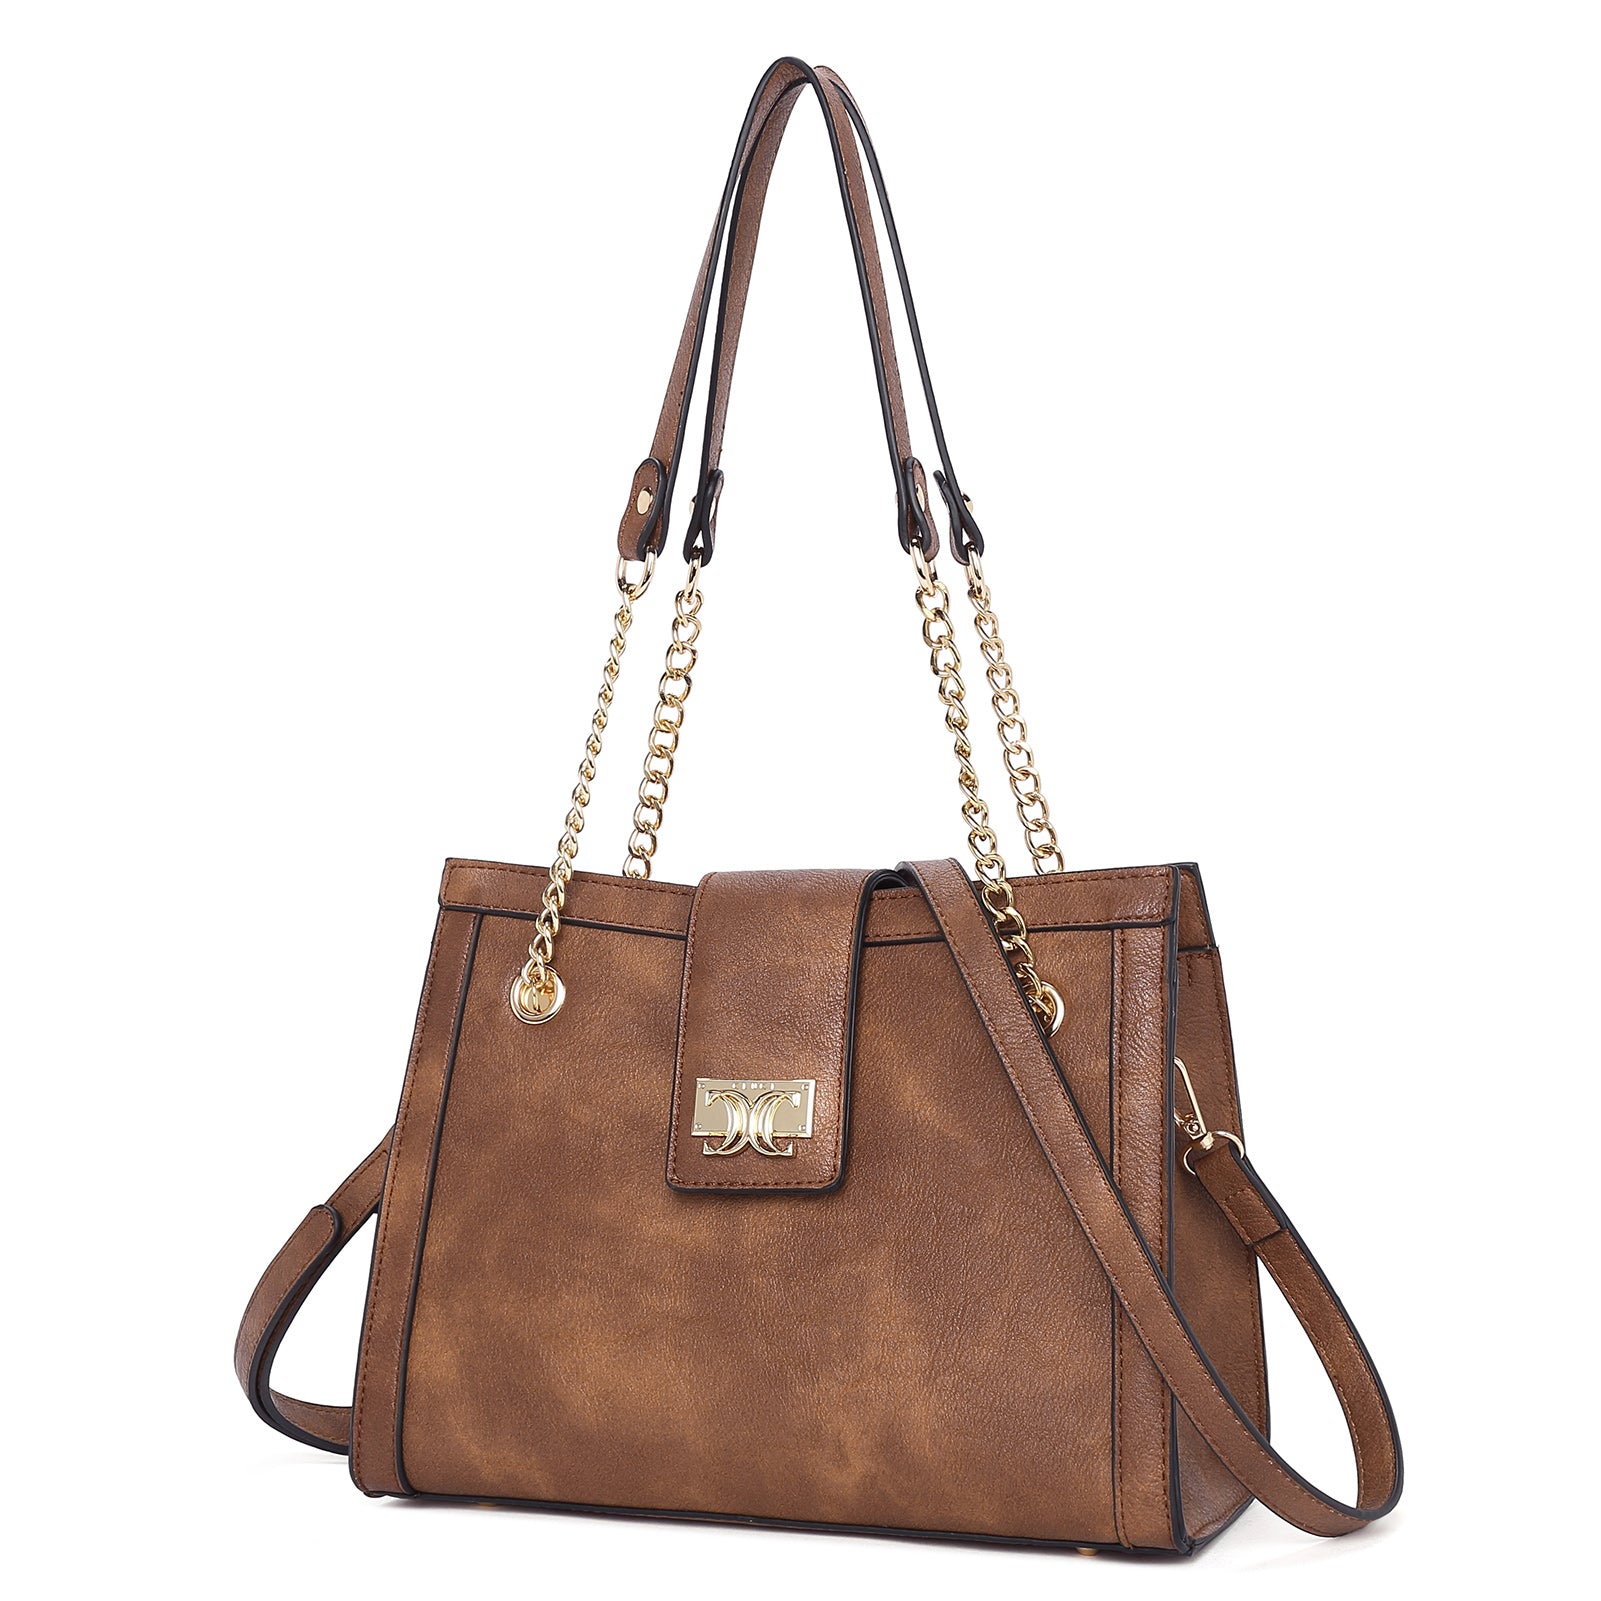 CLUCI Satchel Purses and Handbags for Women Leather Totes Designer Ladies Crossbody Shoulder Bag